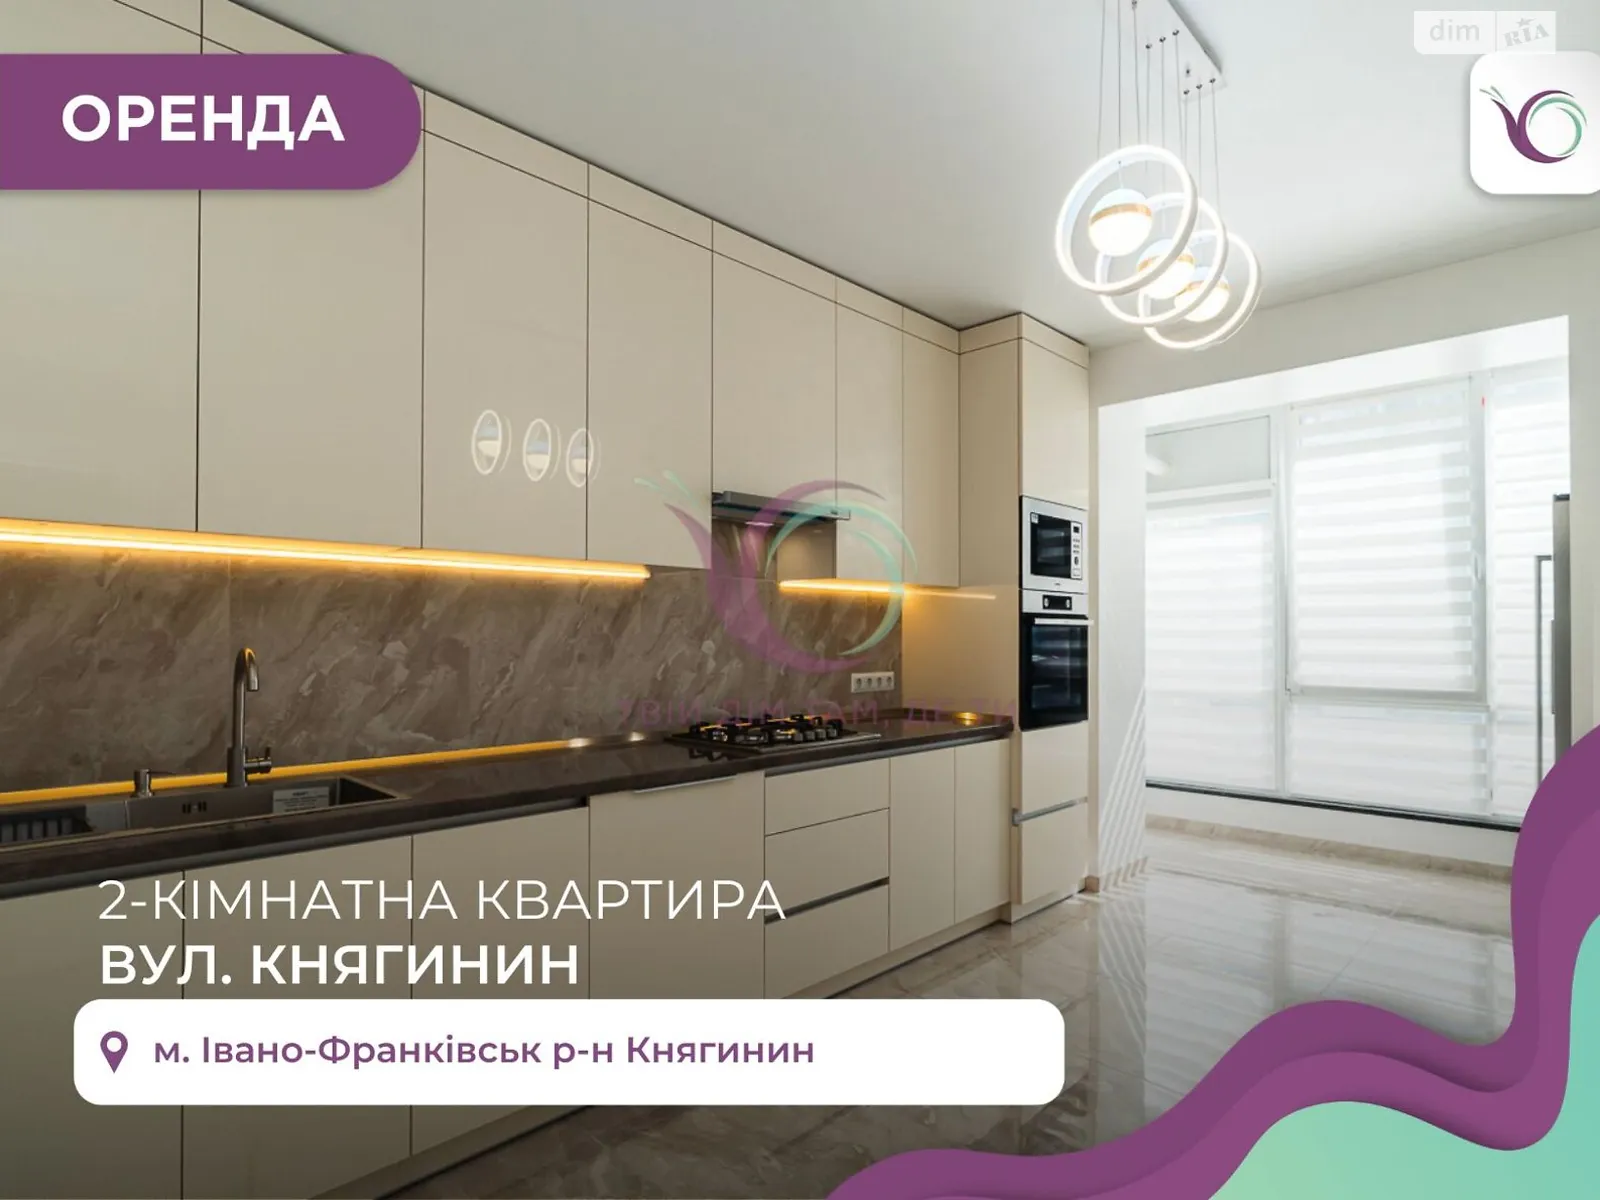 Сдается в аренду 2-комнатная квартира 68 кв. м в Ивано-Франковске, ул. Княгинин, 44 - фото 1